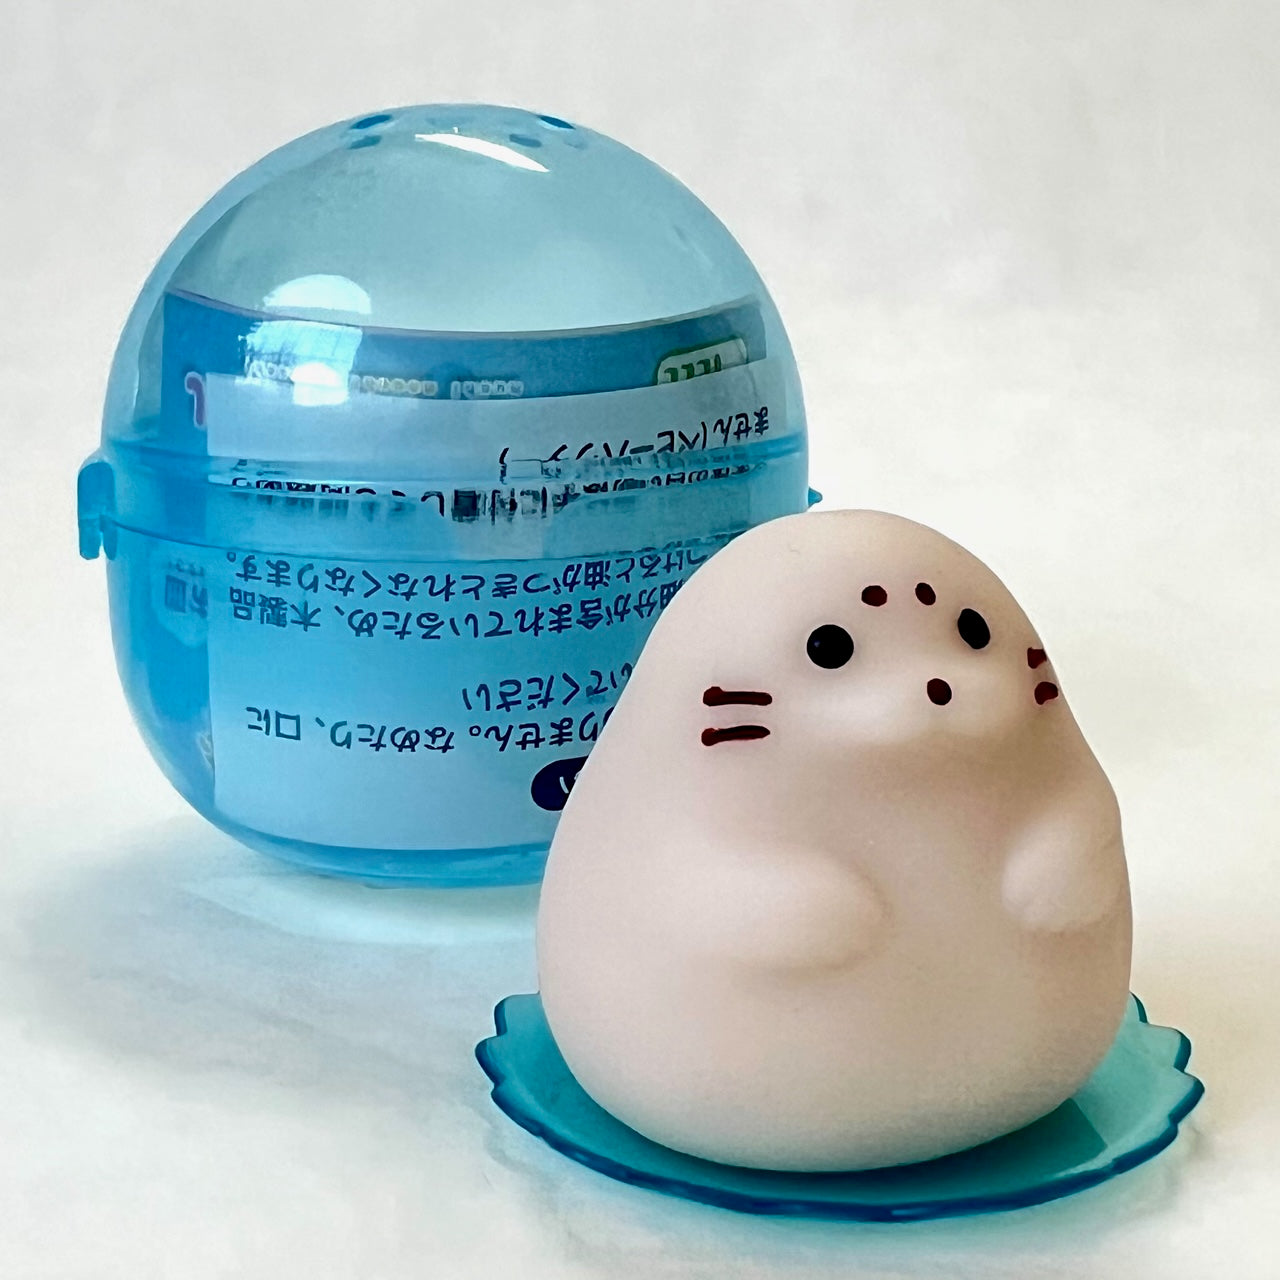 X 70995 Squishy Seal Figurine Capsule-DISCONTINUED